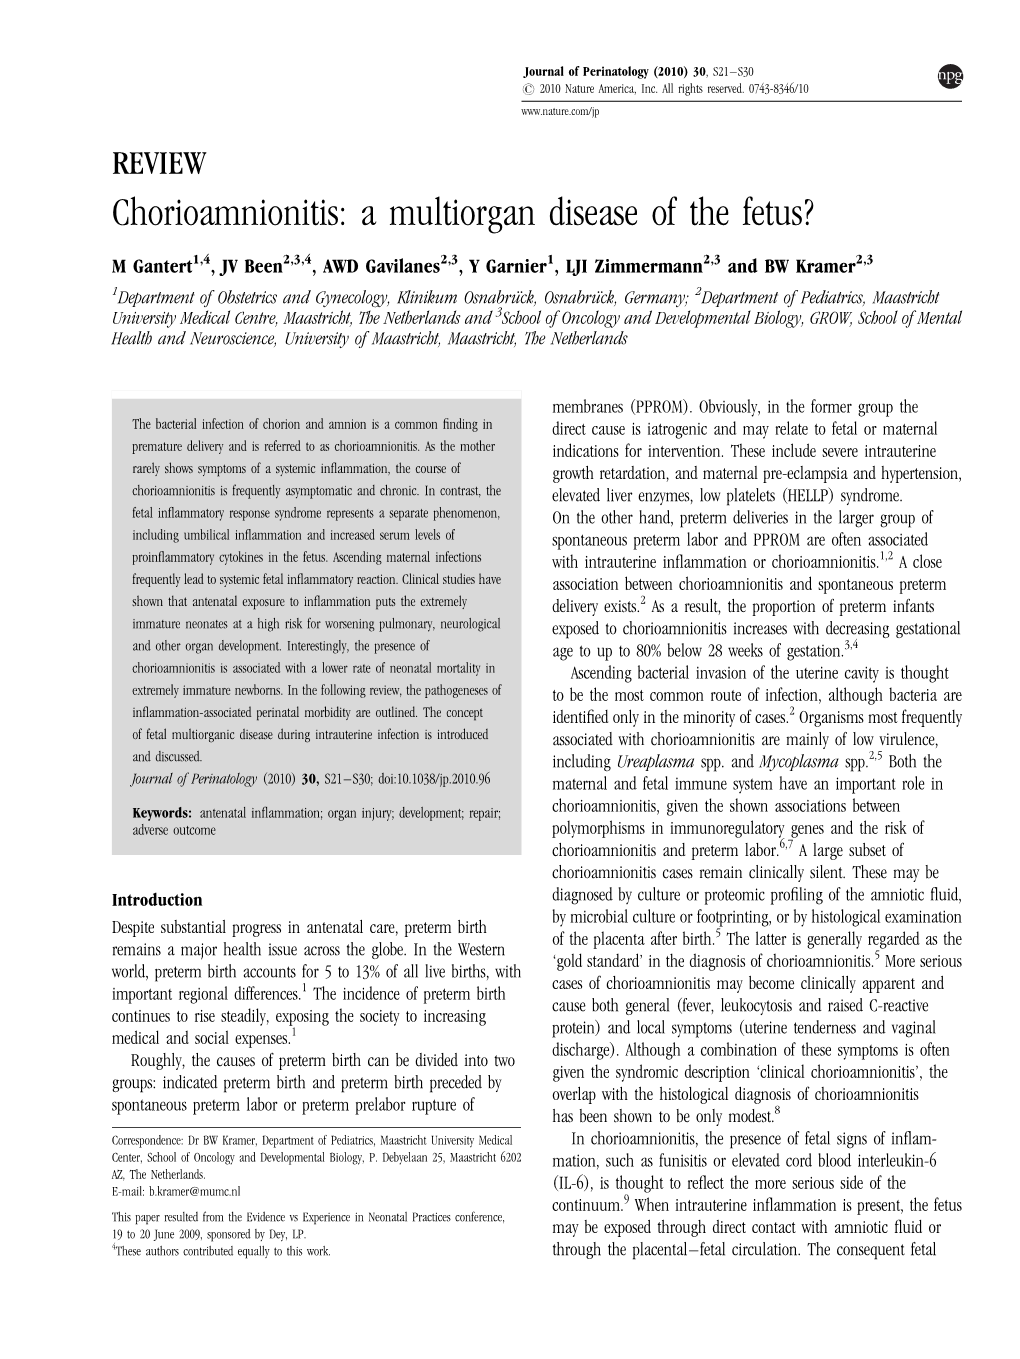 Chorioamnionitis: a Multiorgan Disease of the Fetus?